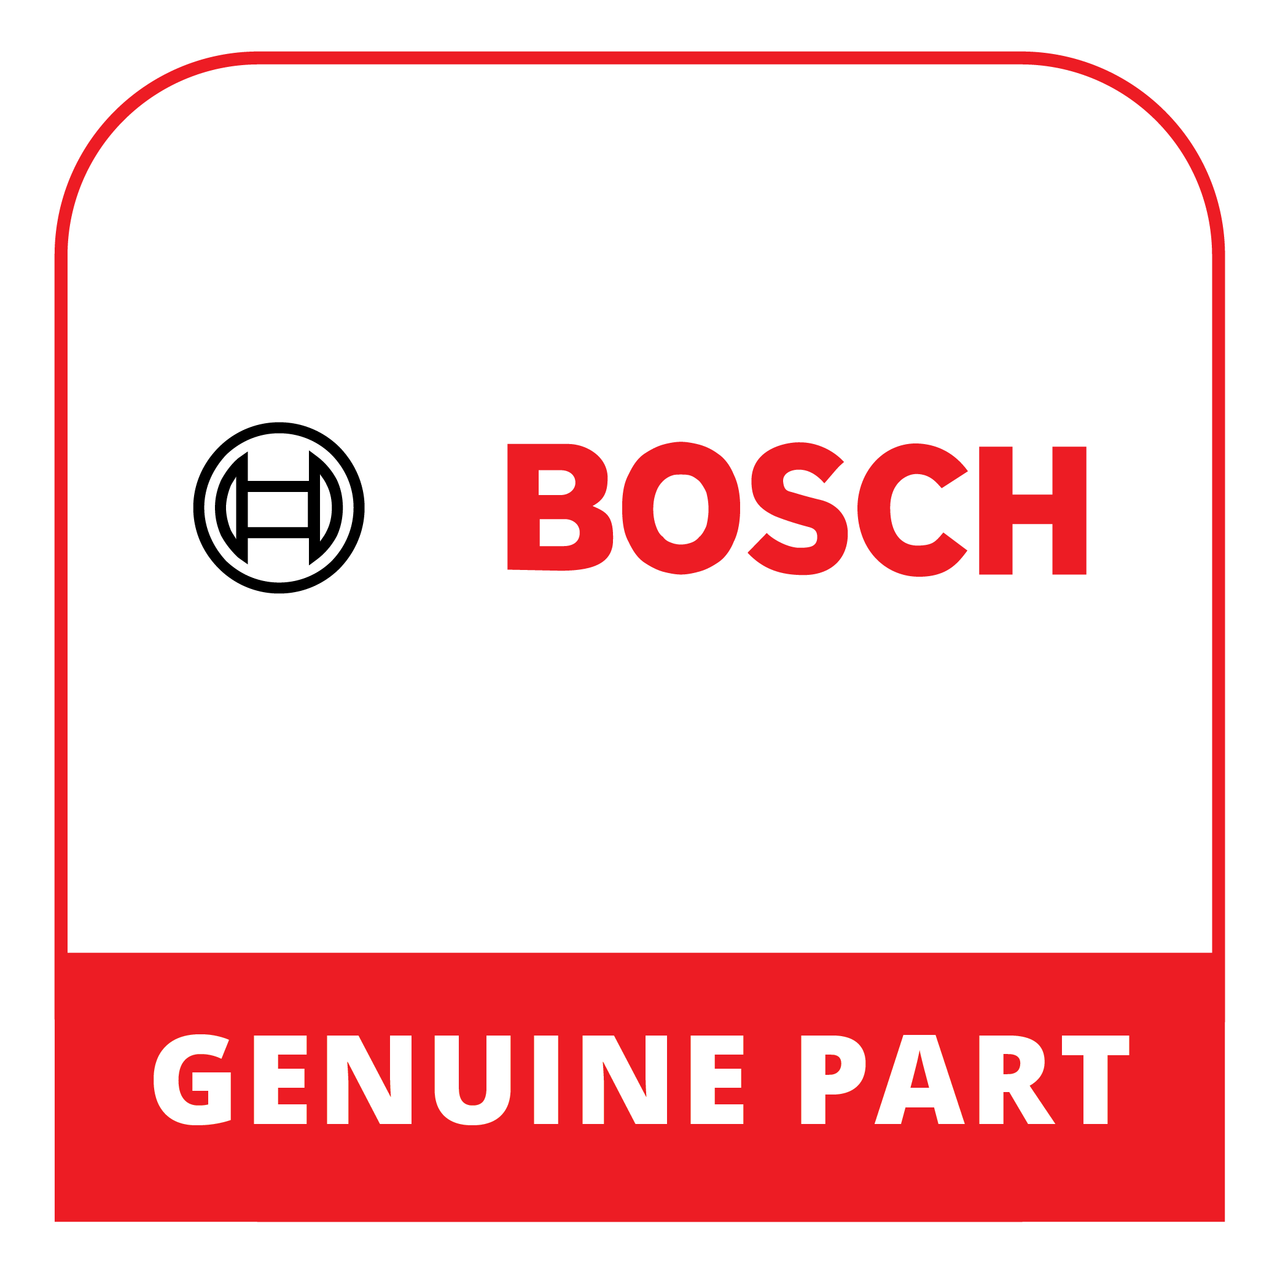 Bosch (Thermador) 20002825 - Door-Outer - Genuine Bosch (Thermador) Part